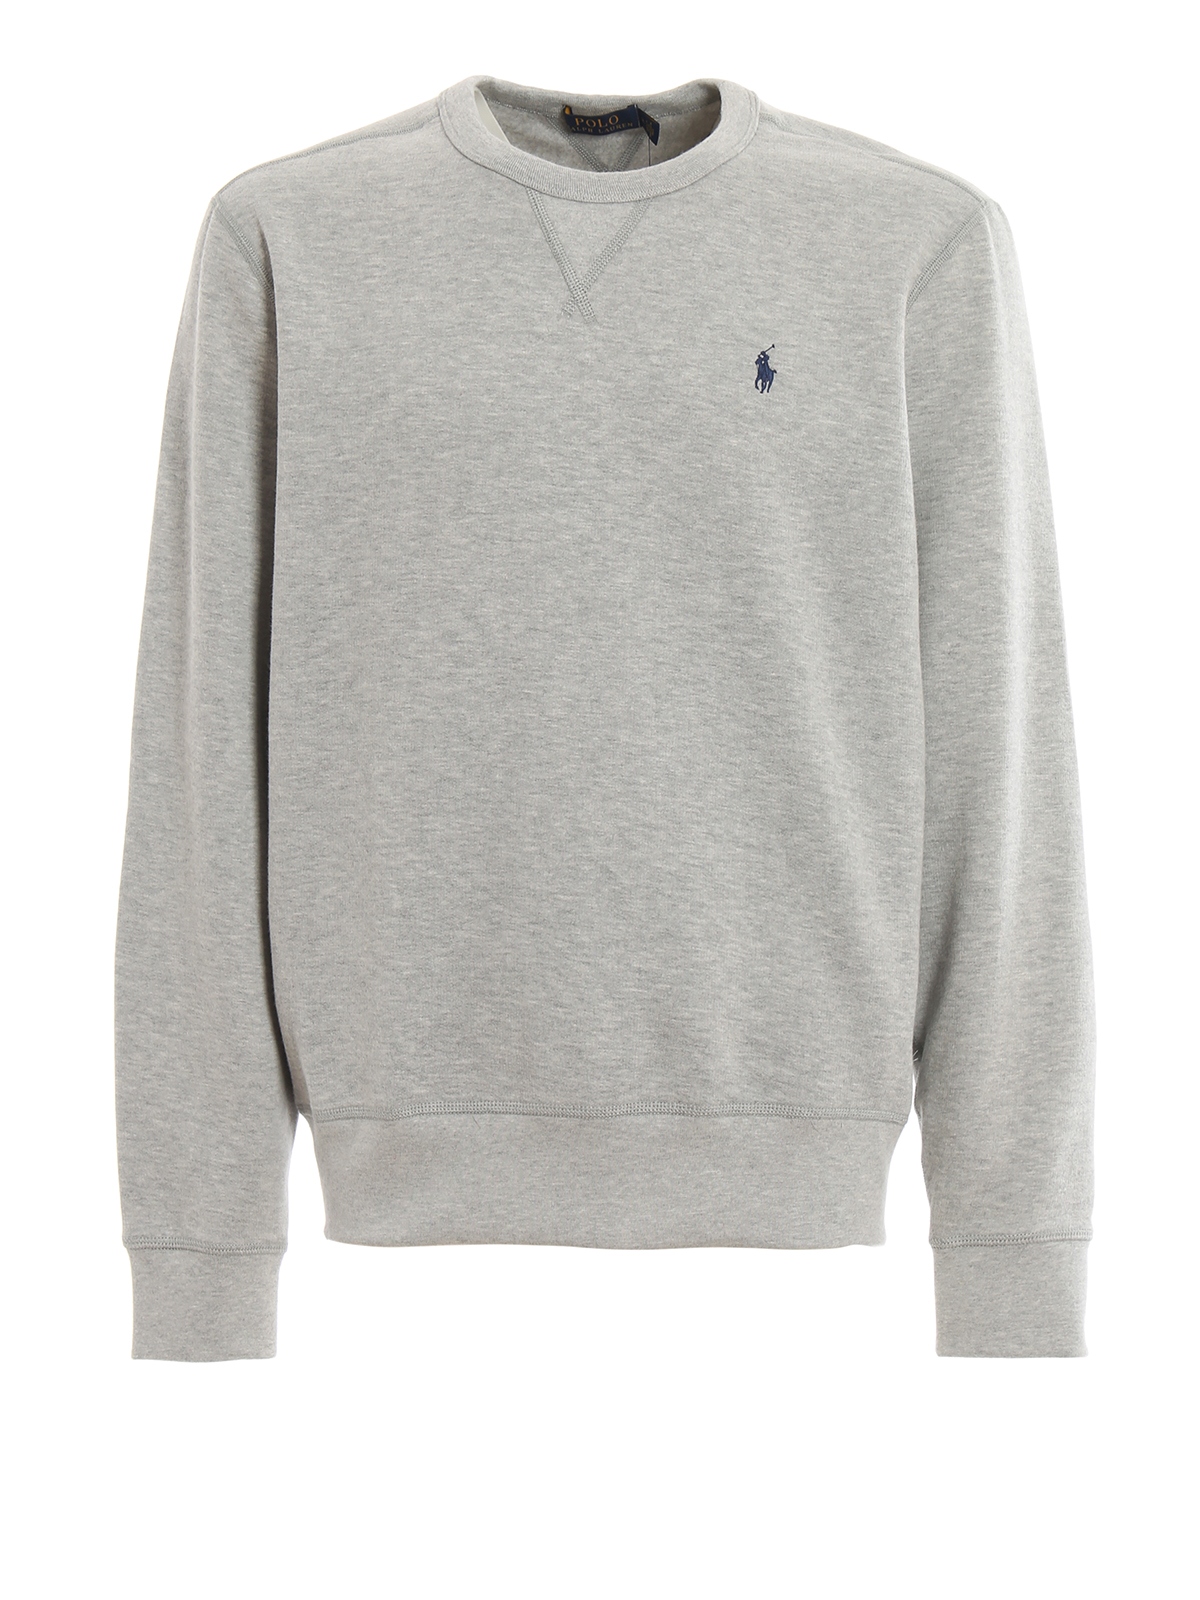 Sweatshirts & Sweaters Polo Ralph Lauren - Grey cotton blend sweatshirt -  710766772004